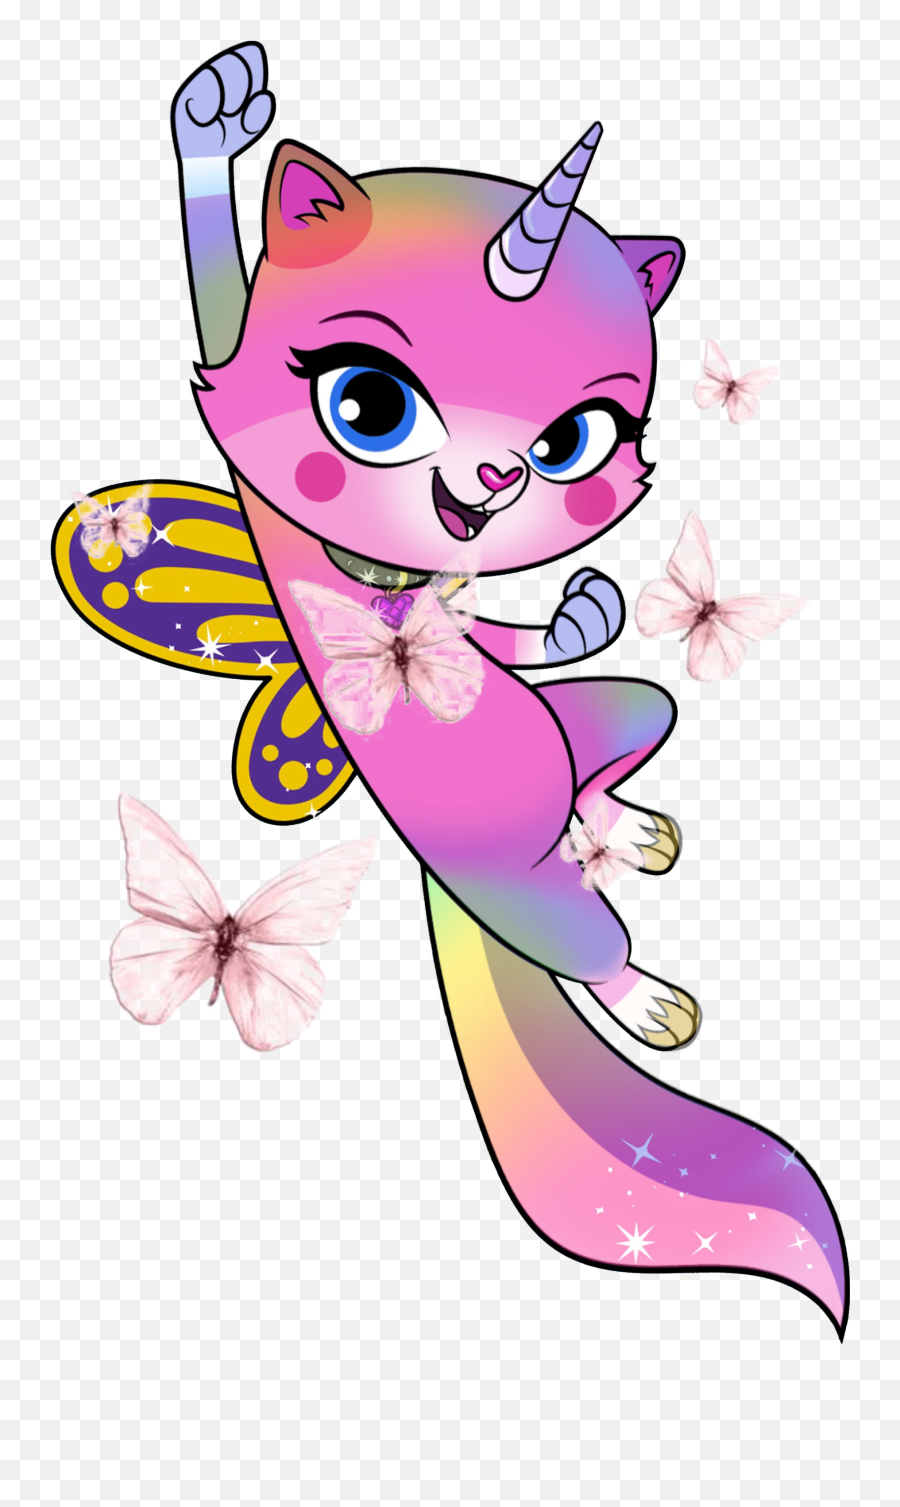 Rainbow Butterfly Unicorn Kitty Httpswwwpngitemcom - Rainbow Butterfly Unicorn Kitty Png Emoji,Unicorn Emoji Pillow